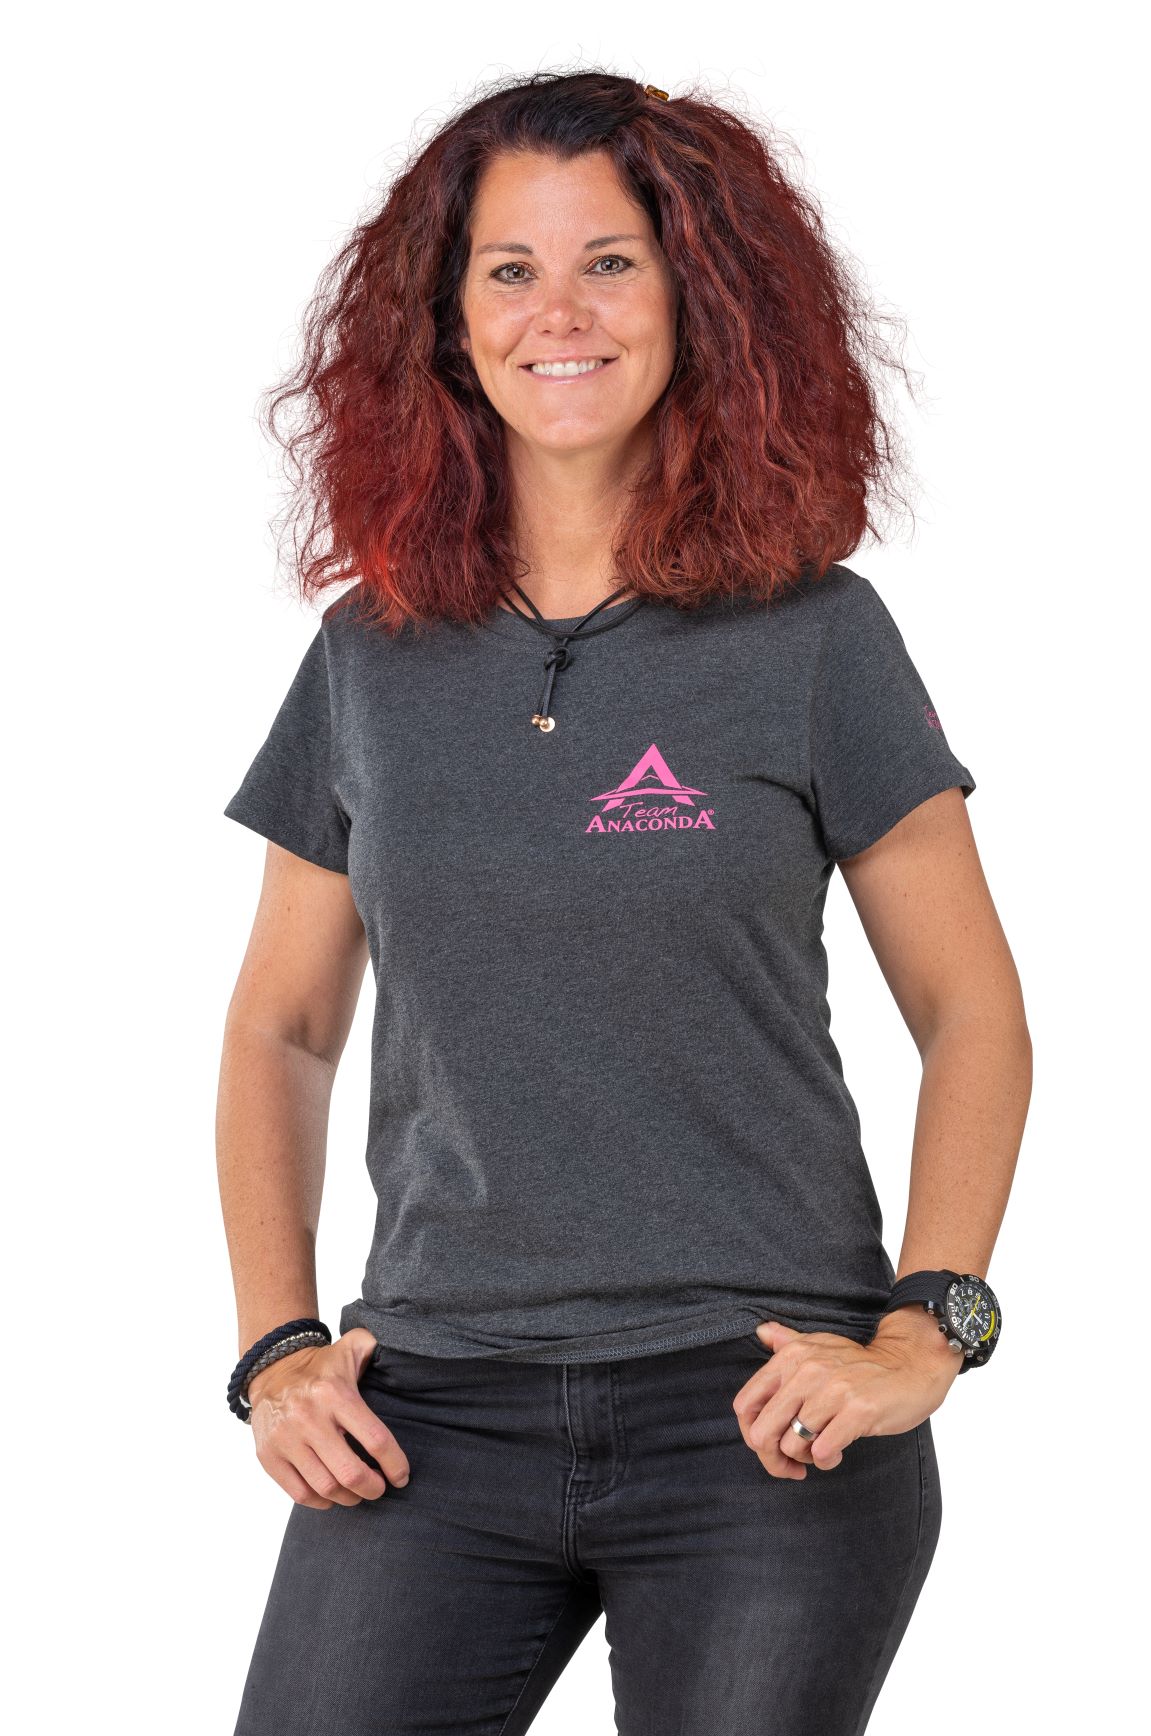 Anaconda dámské tričko Lady Team Velikost: M